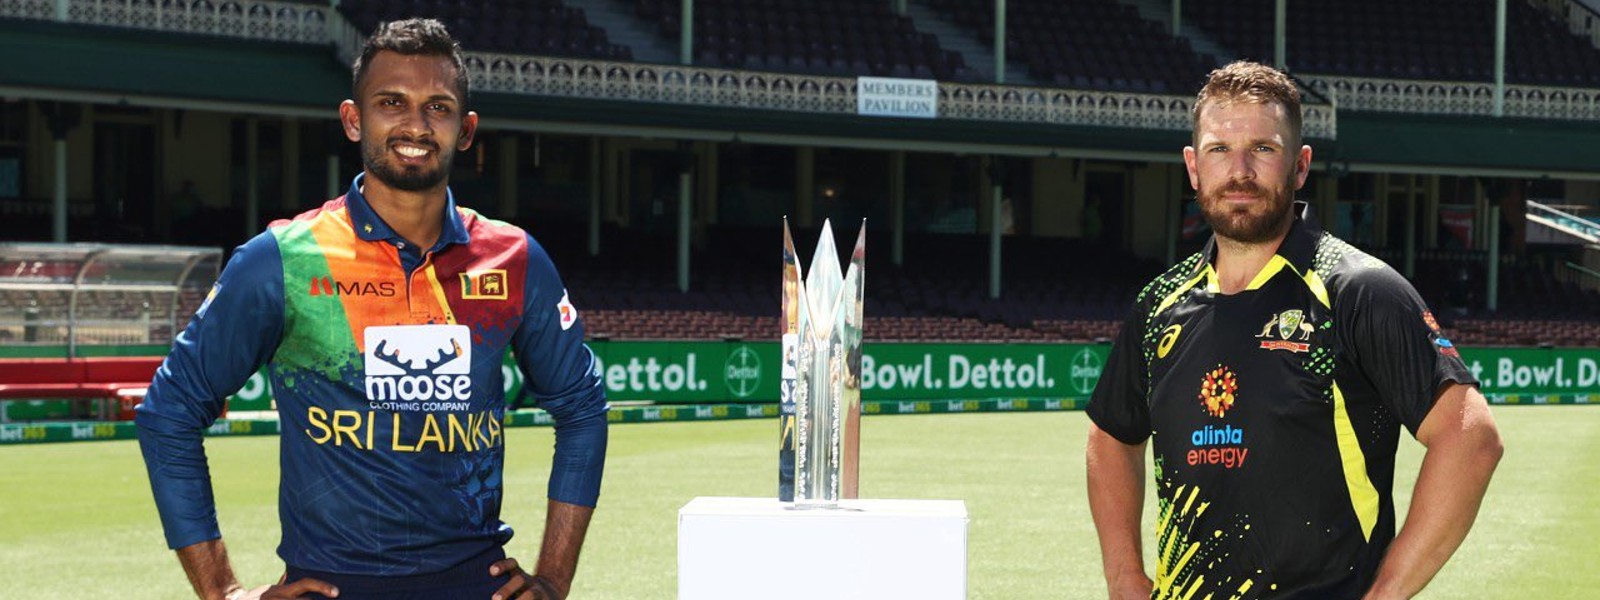 SL vs Aus: Sri Lanka beat Australia by 5 wickets